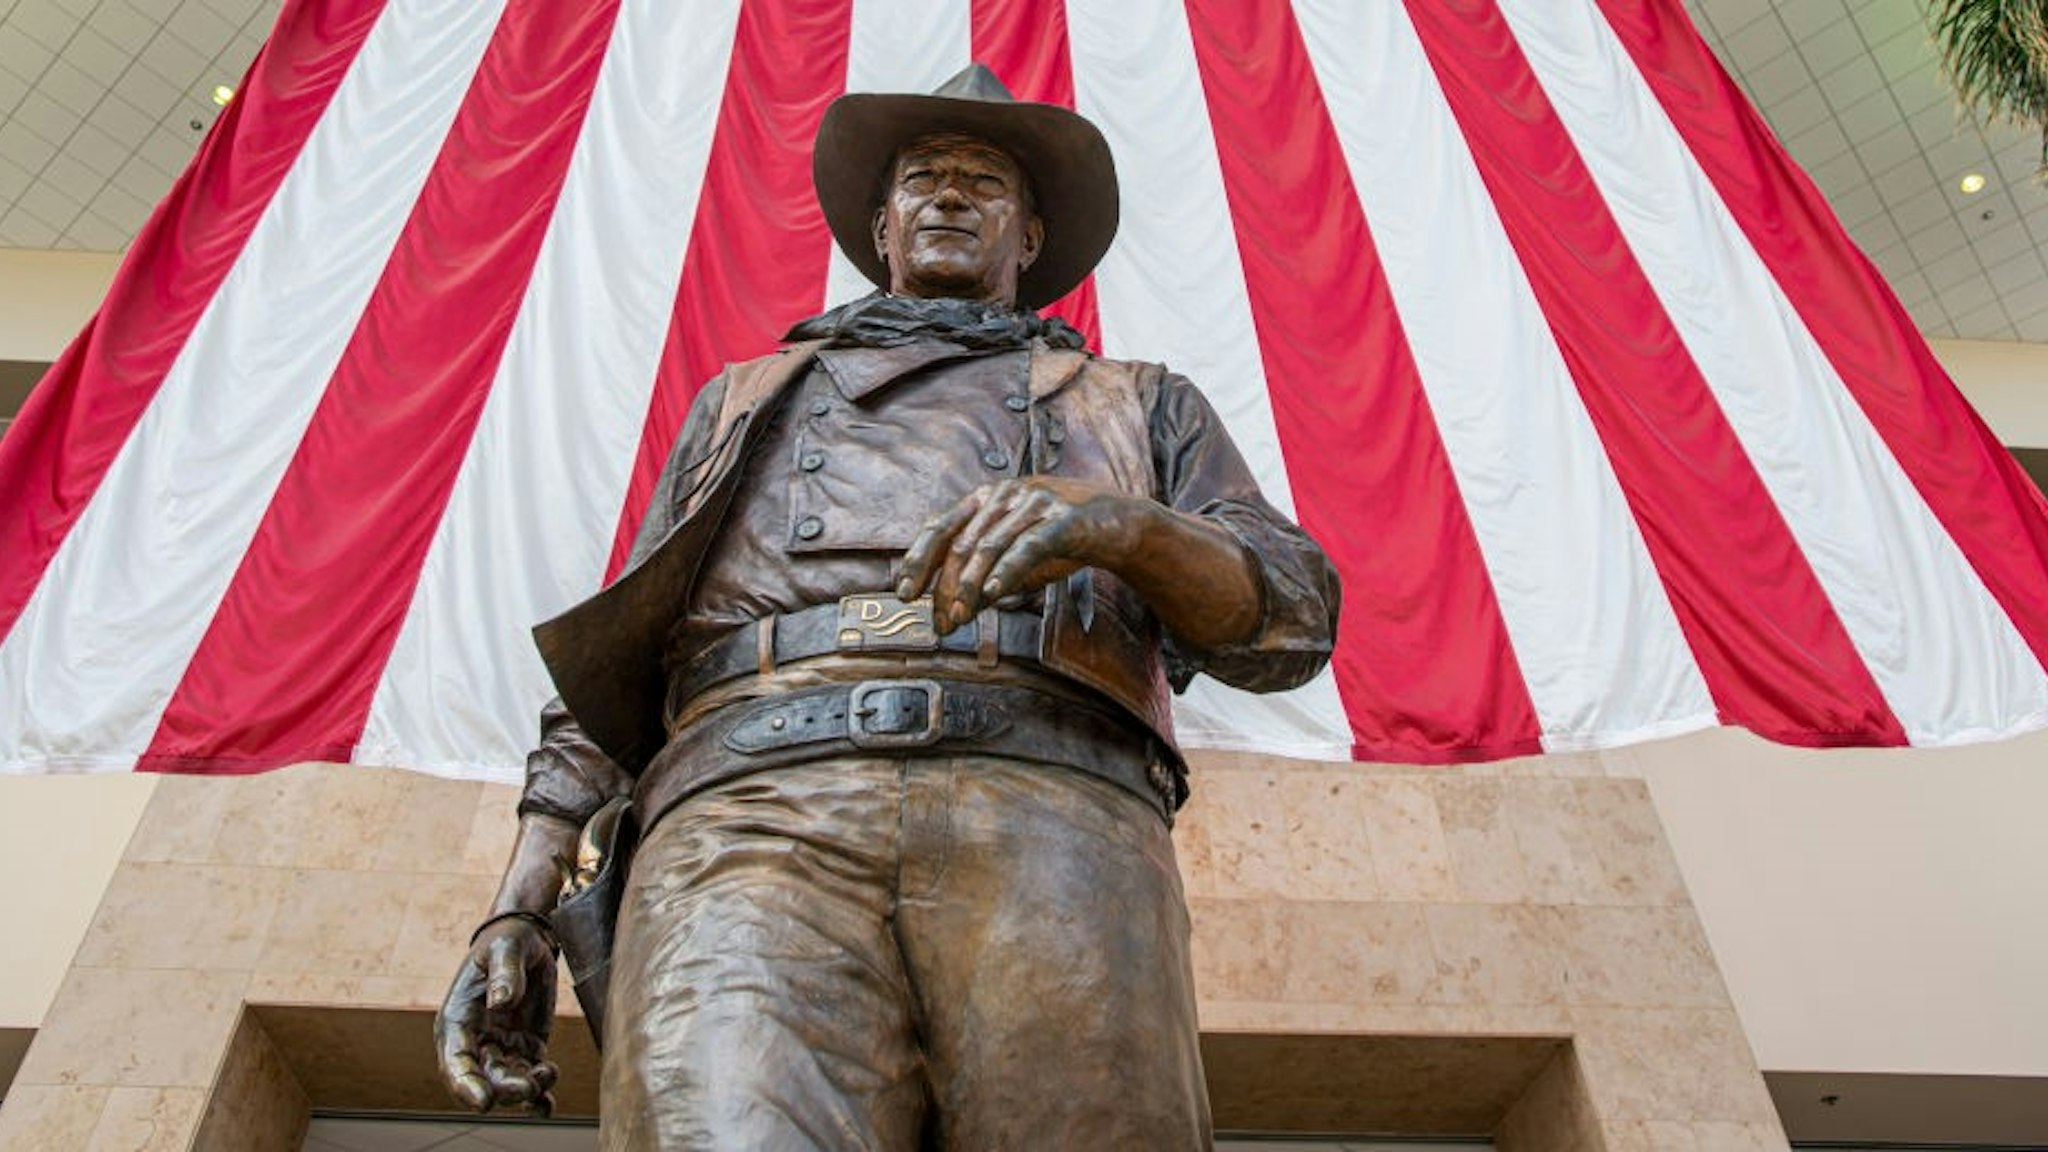 SANTA ANA, CA - SEPTEMBER 25: The statue of John Wayne at John Wayne Airport in Santa Ana on Wednesday, September 25, 2019. (Photo by